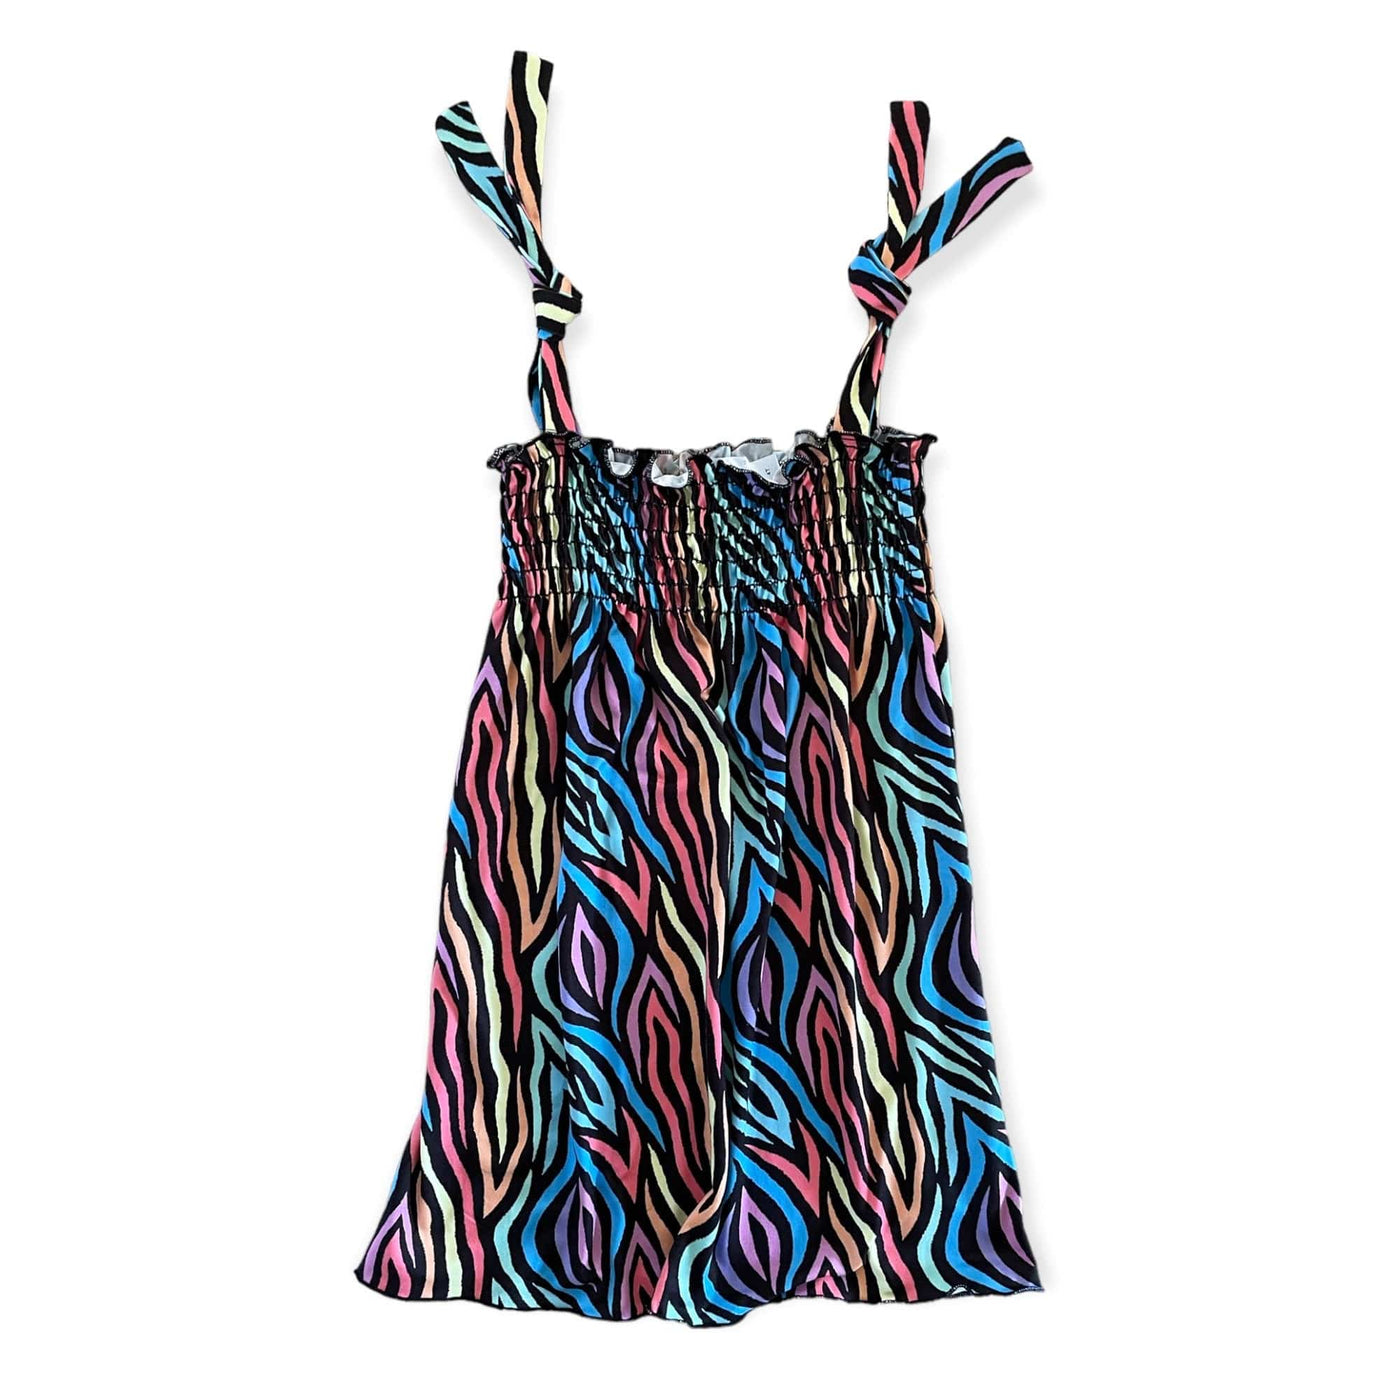 Best Day Ever Kids Baby & Toddler Dresses Zany Zebra Smocked Dress buy online boutique kids clothing